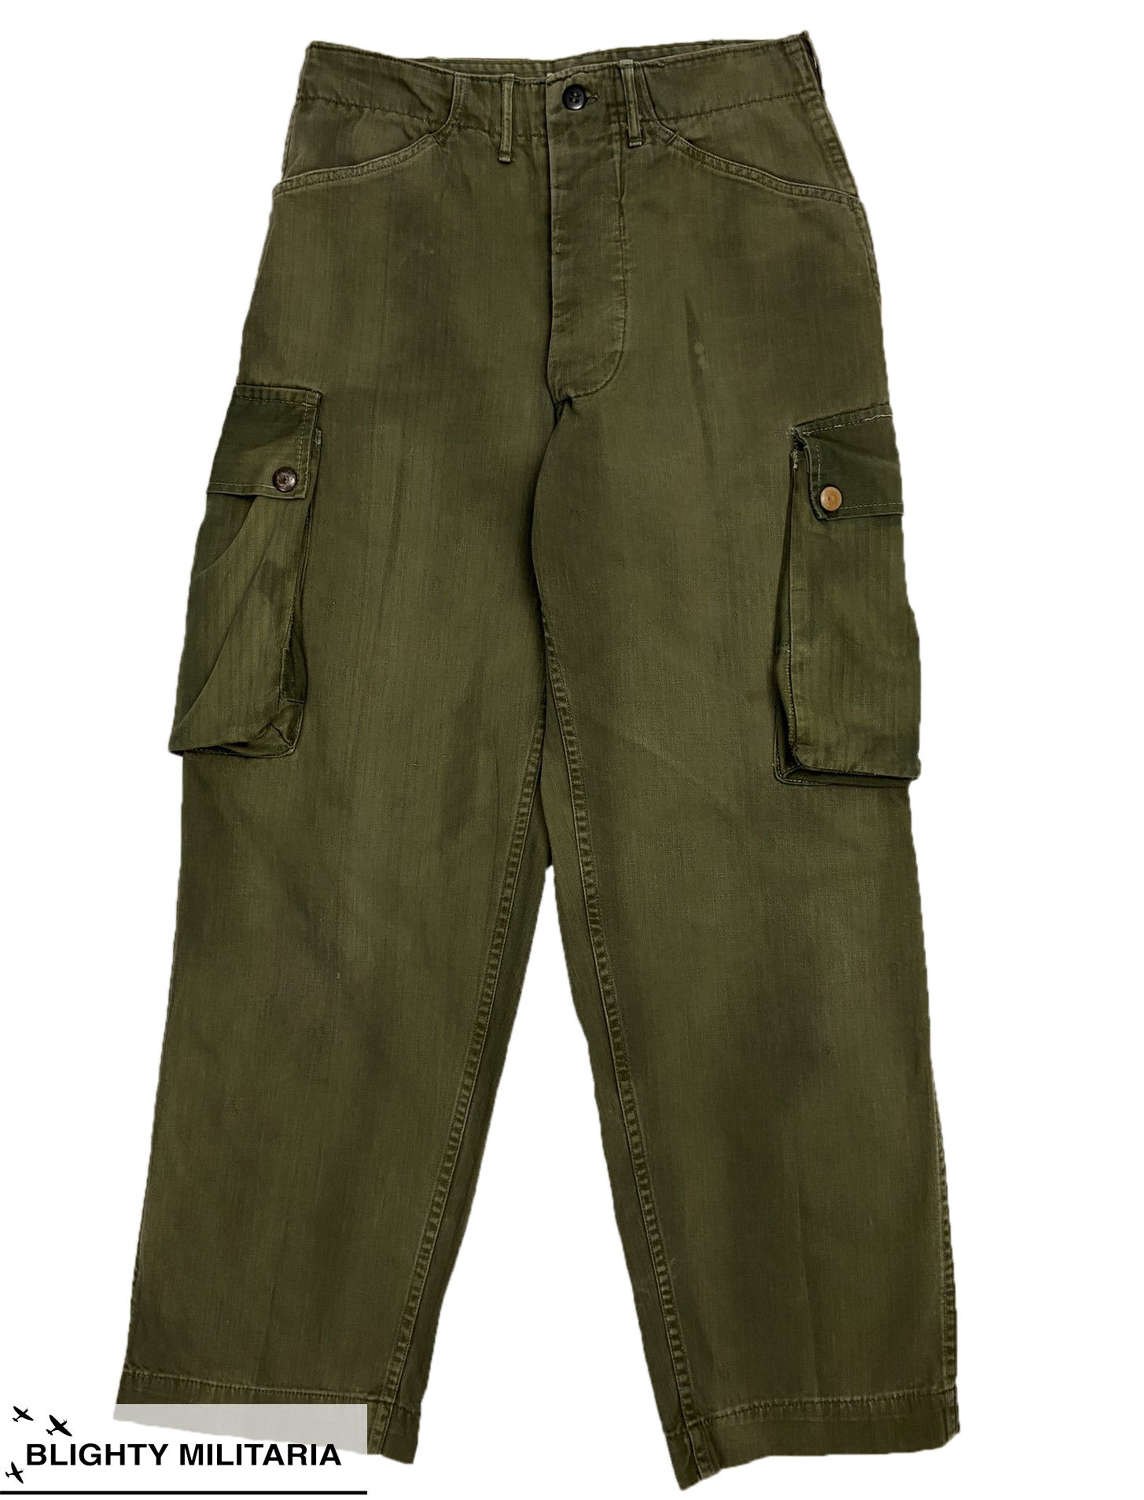 Buy Brown Trousers  Pants for Men by Marks  Spencer Online  Ajiocom